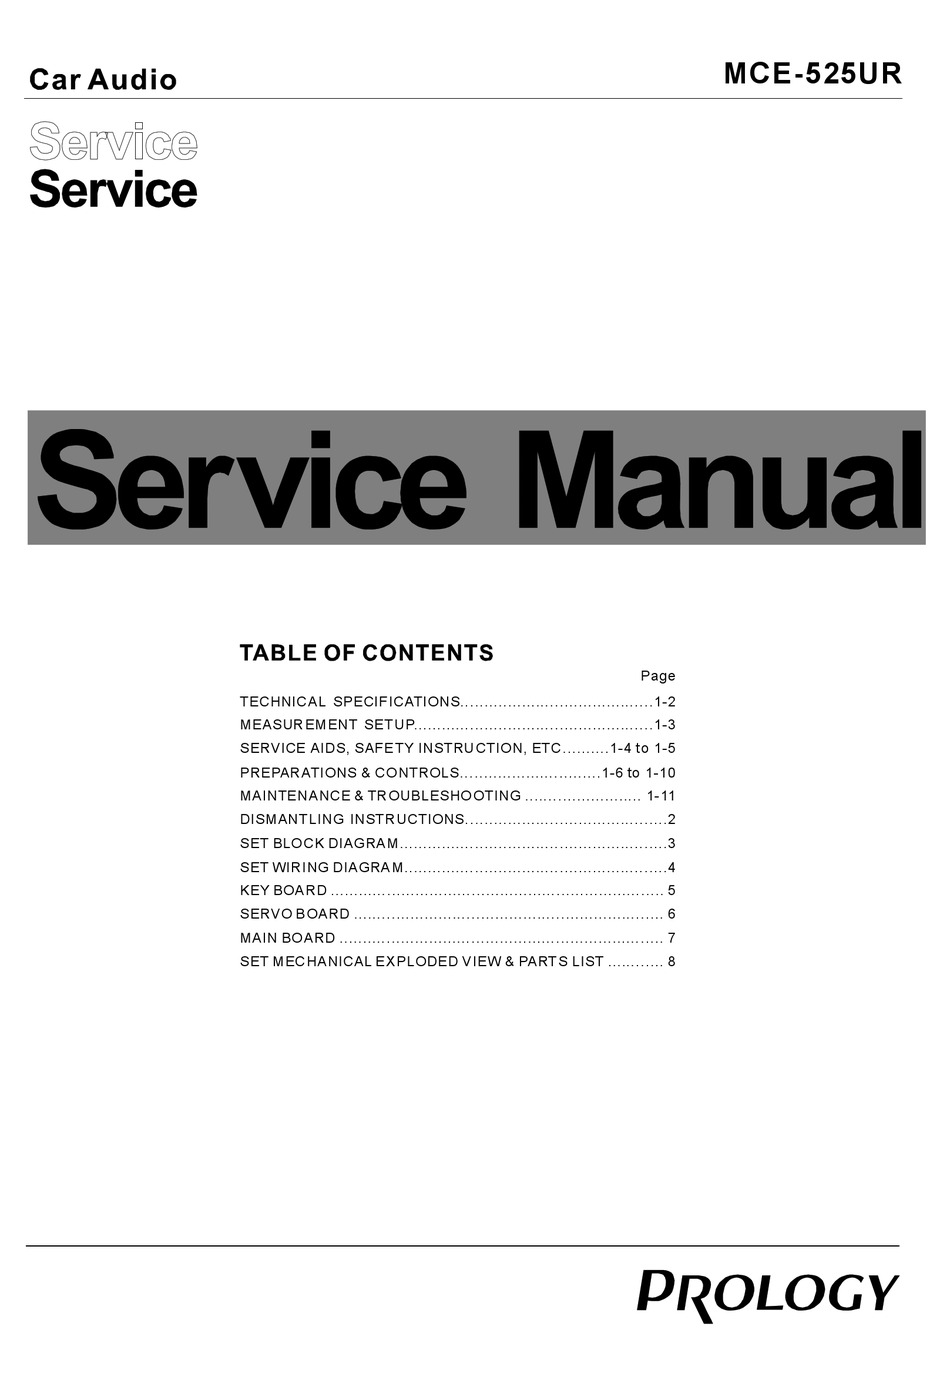 PROLOGY MCE-525UR SERVICE MANUAL Pdf Download | ManualsLib